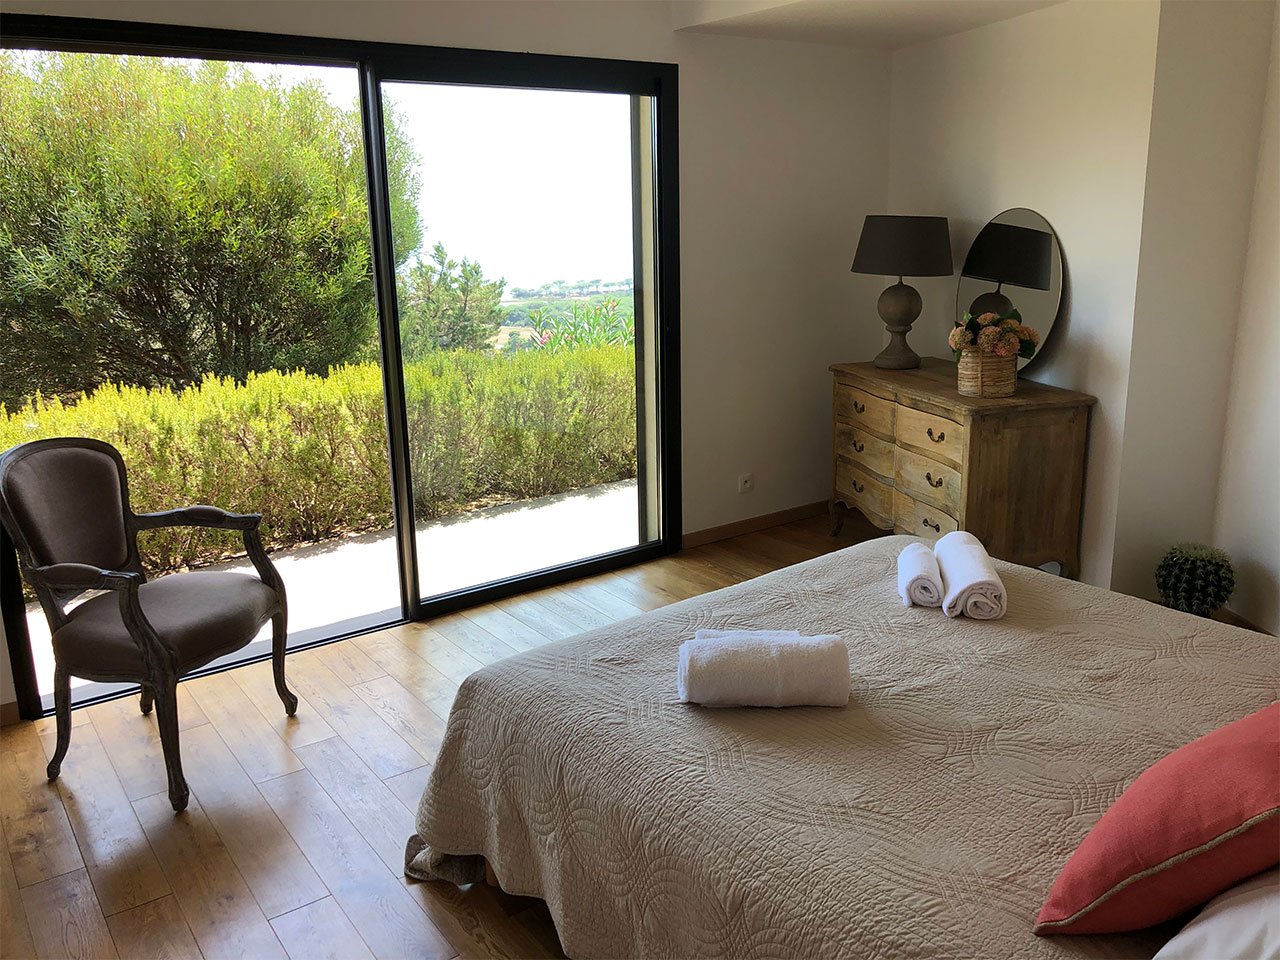 Location villa Palombaggia luxe Porto-Vecchio Corse du Sud vue mer panoramique piscine proche plage 5 chambres grand espace, moderne, contemporaine, climatisée